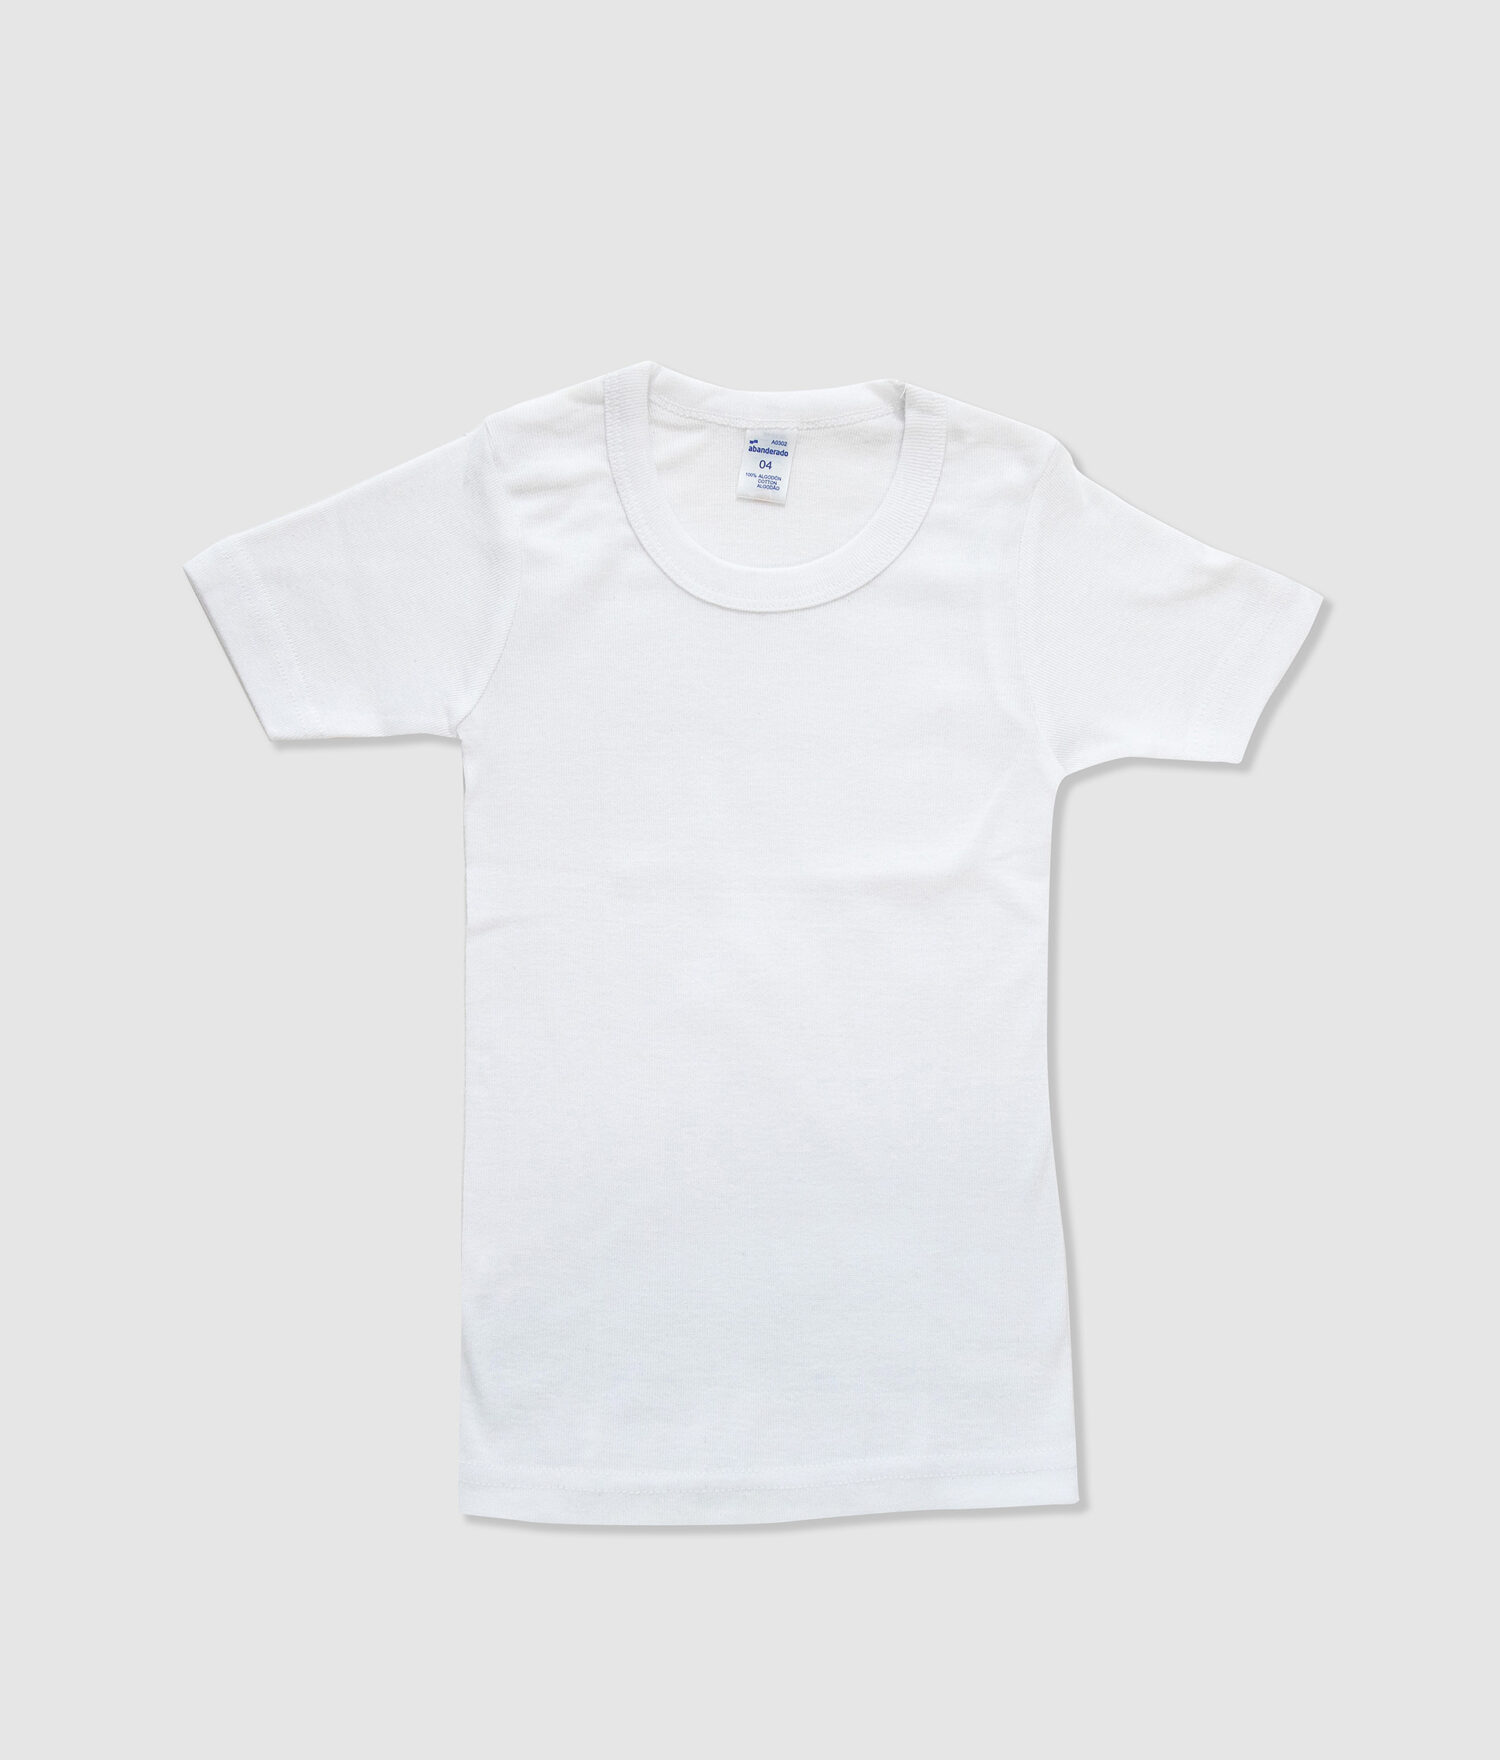 Camiseta interior m/c 100% algodón A0306 Abanderado — CucutBcn